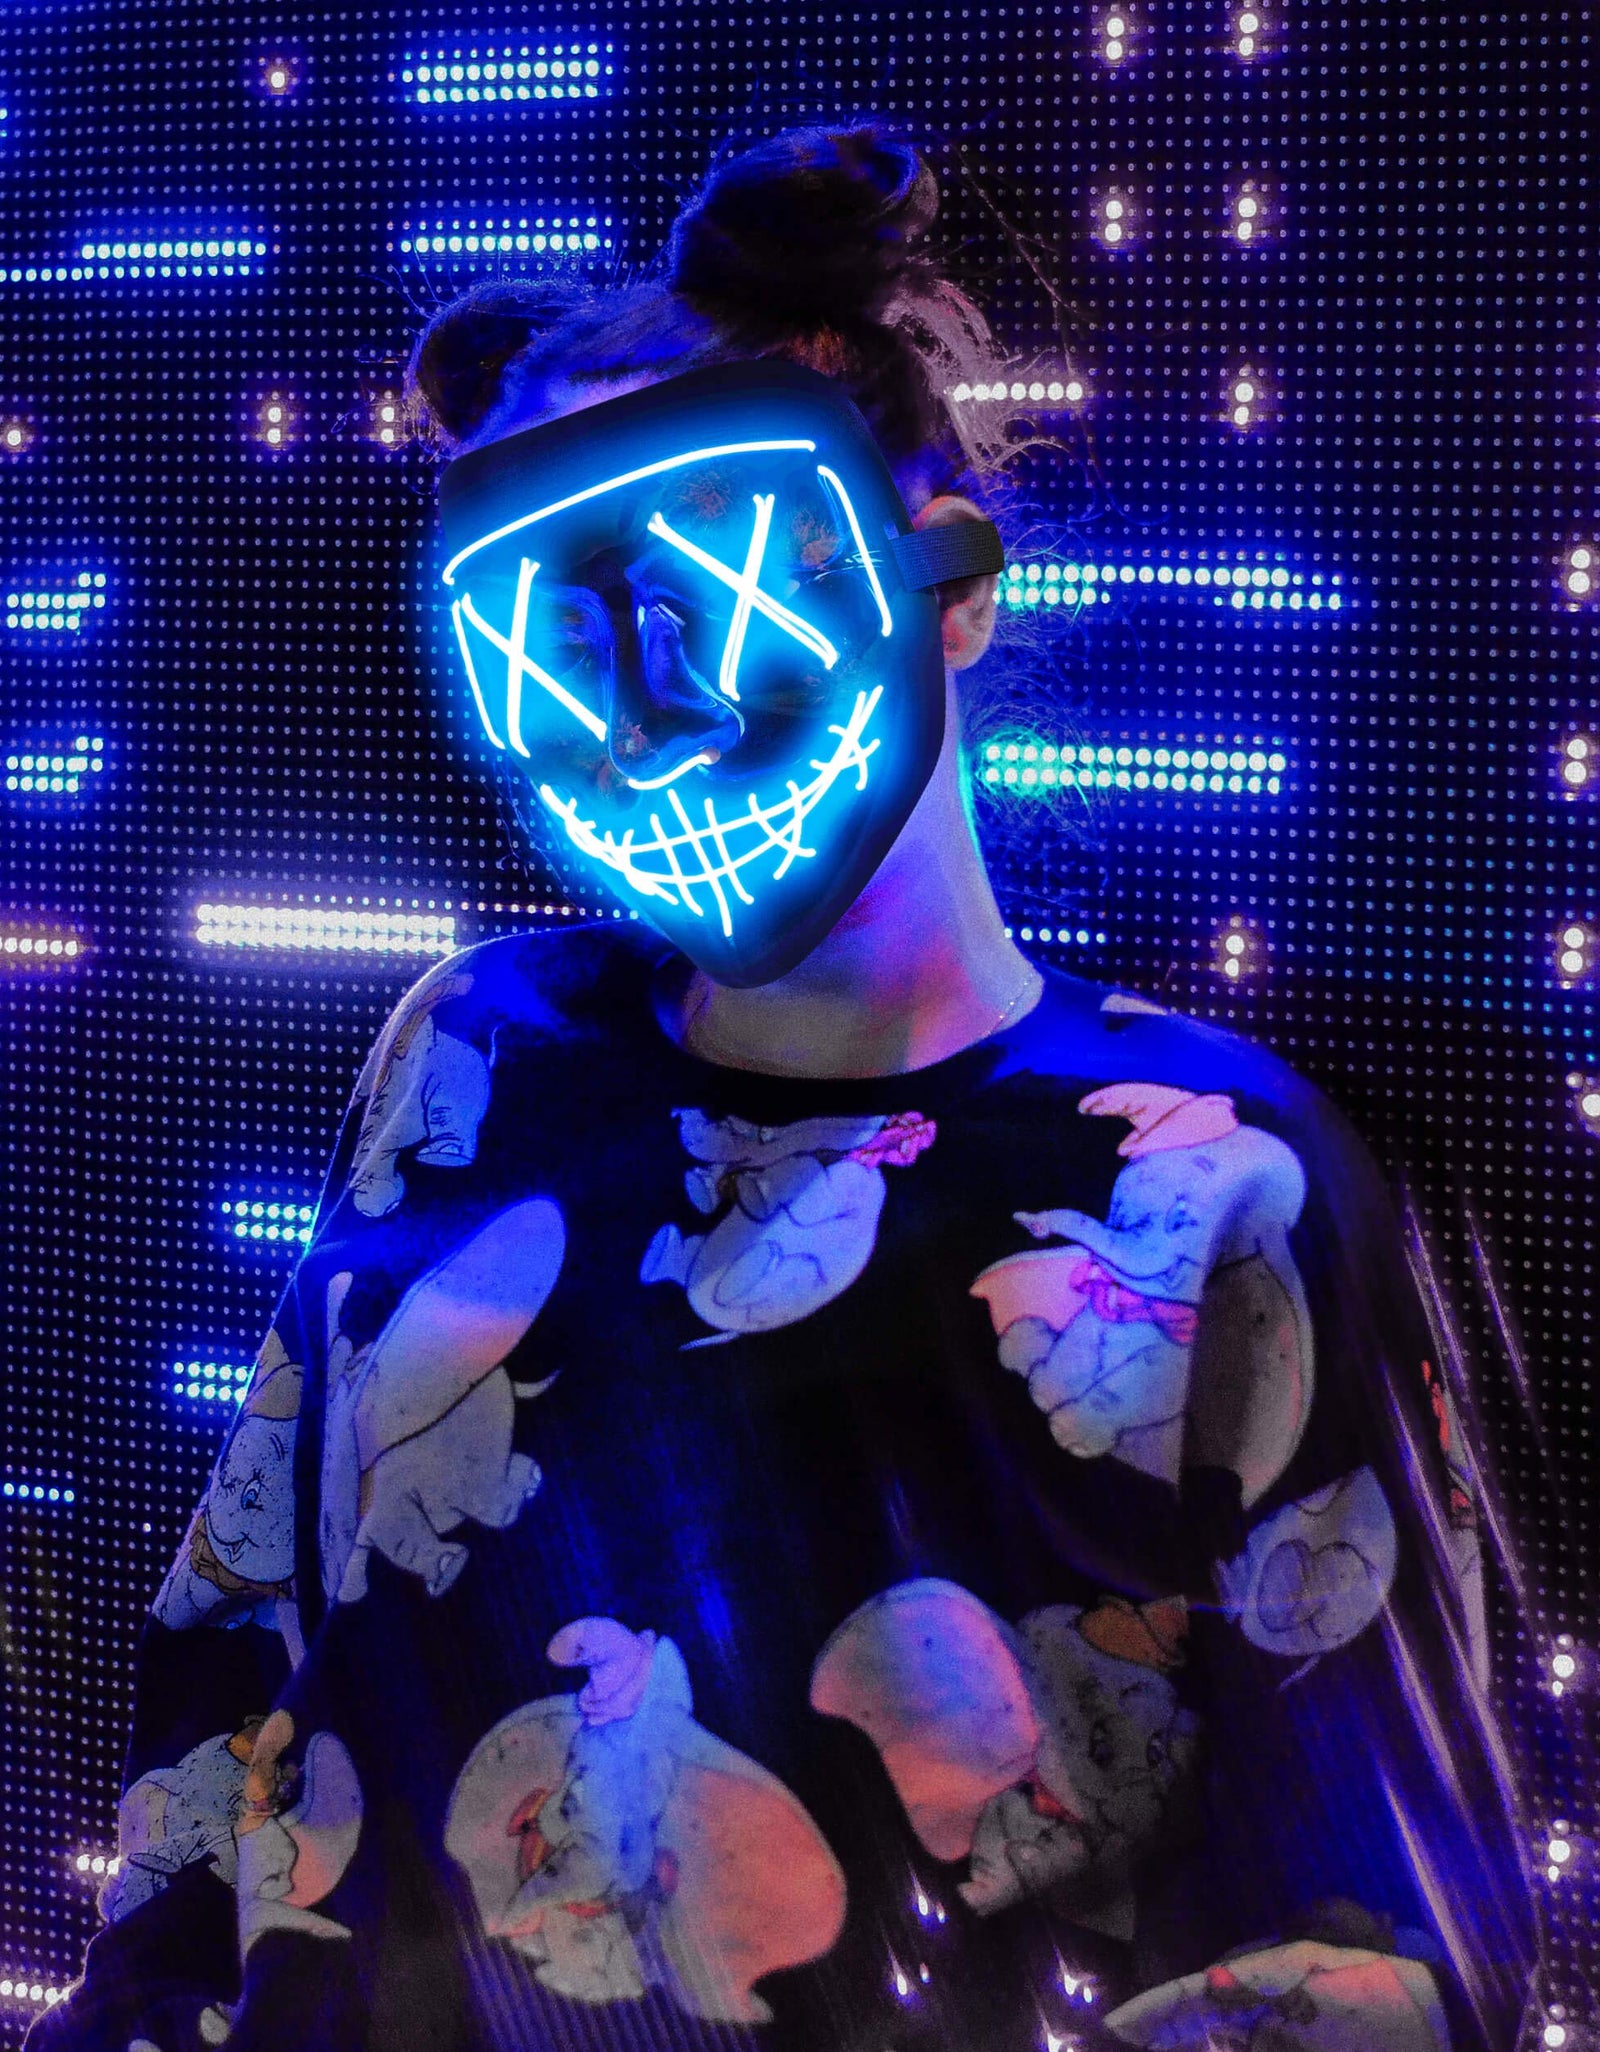 Lizber Halloween Mask Costume, Led Light Up Mask, Scary Hacker Anonymous Mask